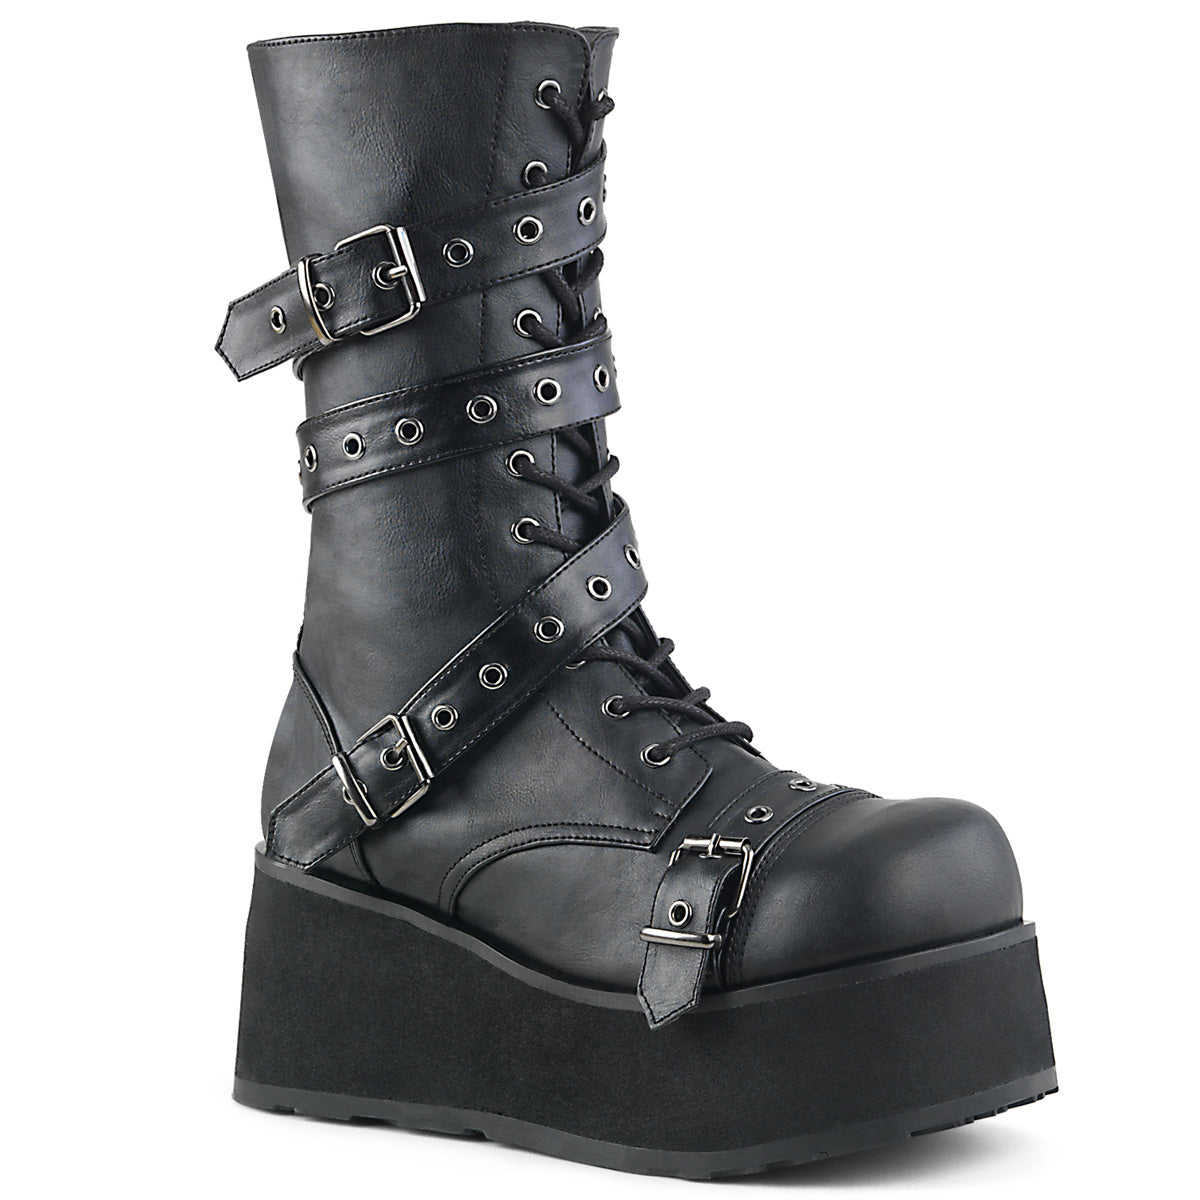 DEMONIA "Trashville-205" Boots - Black Vegan Leather